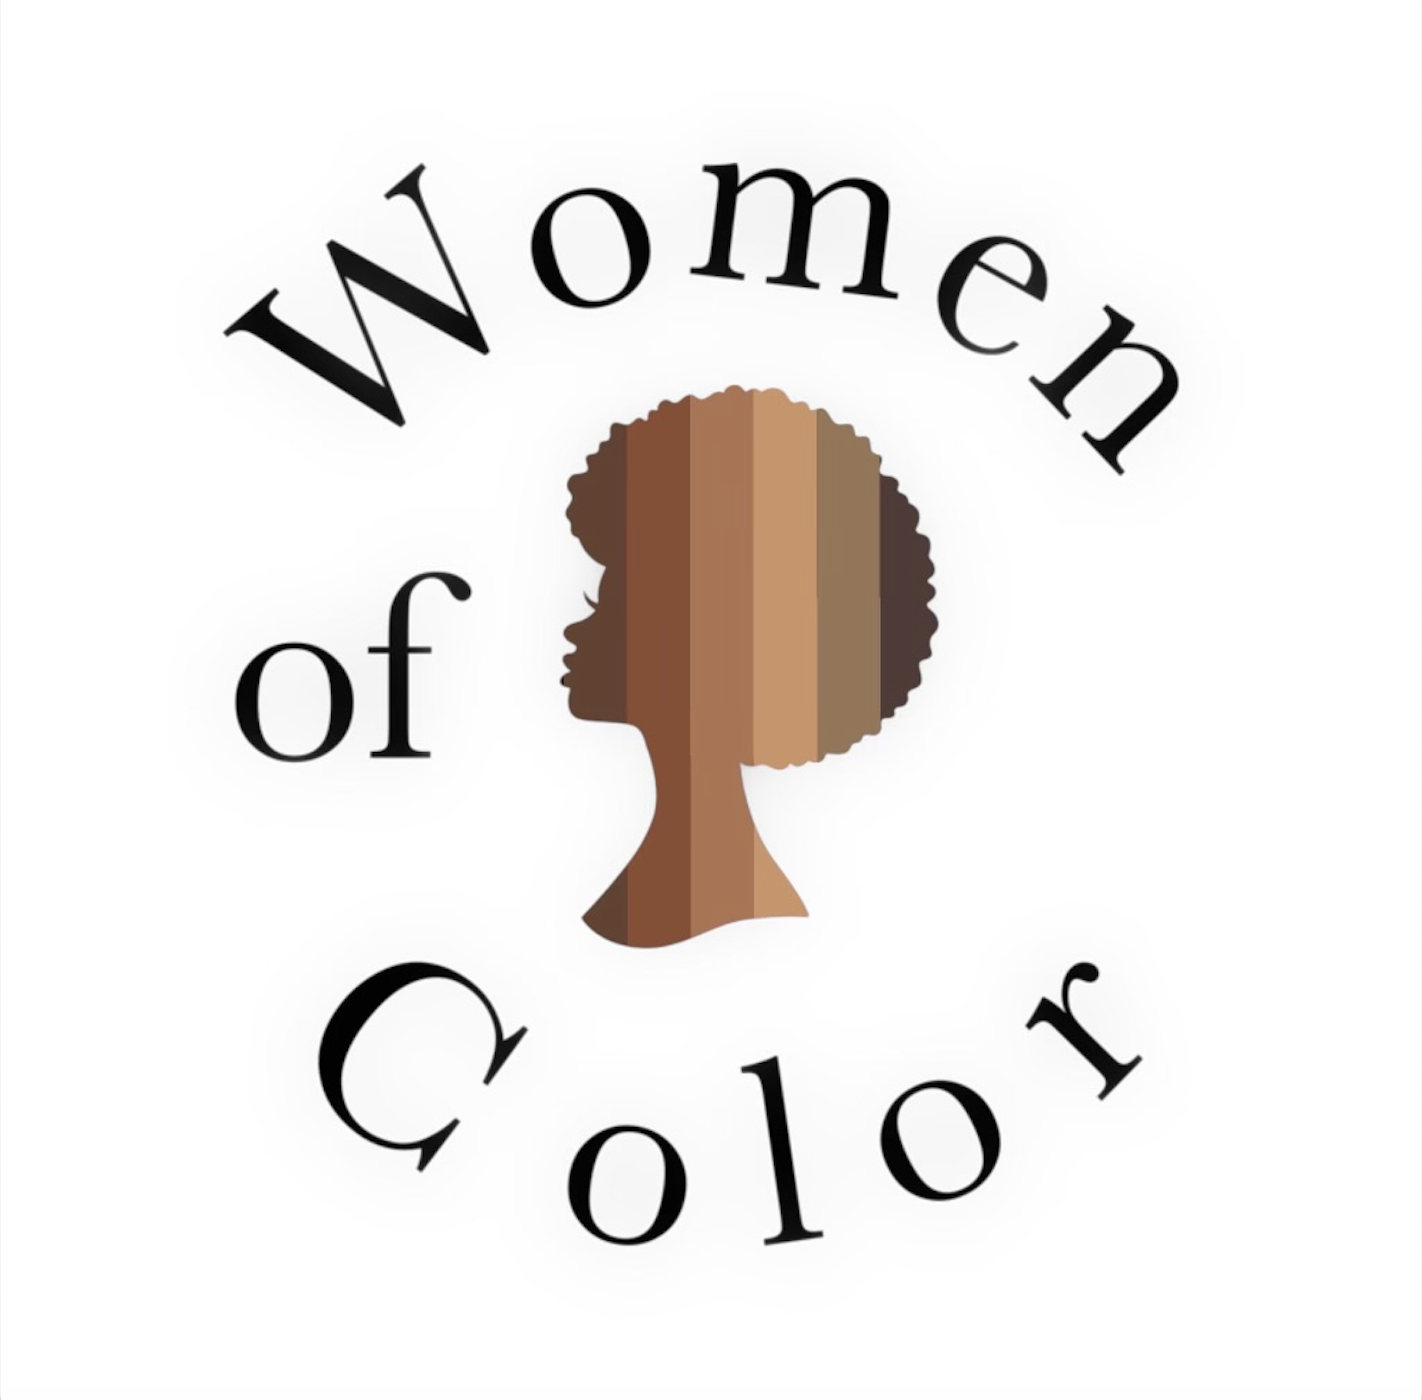 Women of Color Initiative